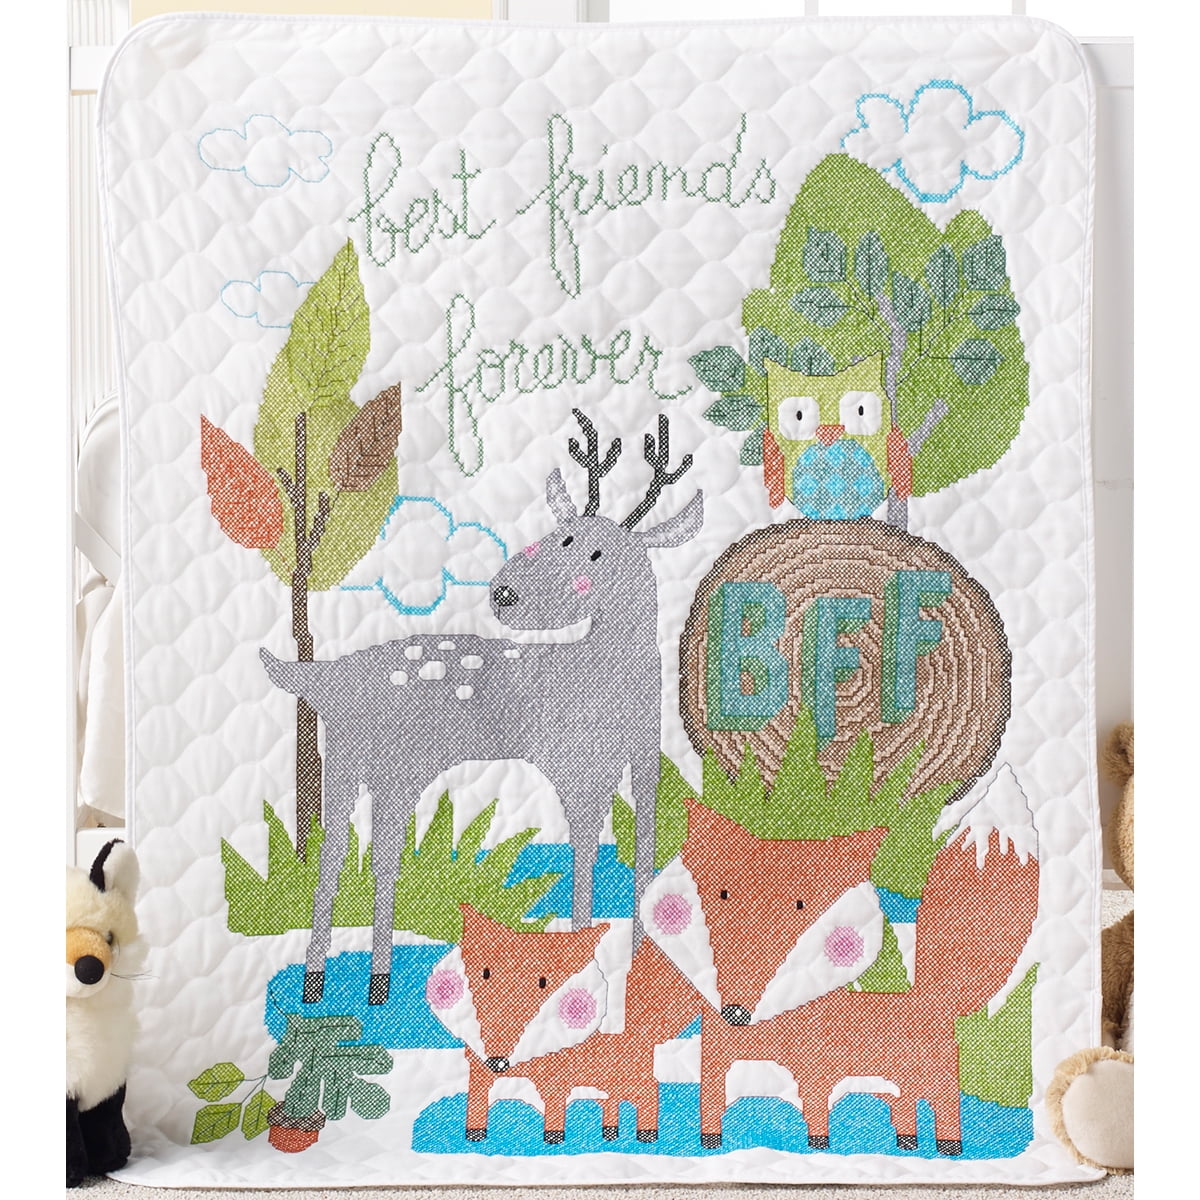 Baby Hugs Farm Friends Quilt Stitch Kit (stamped cross stitch kit)